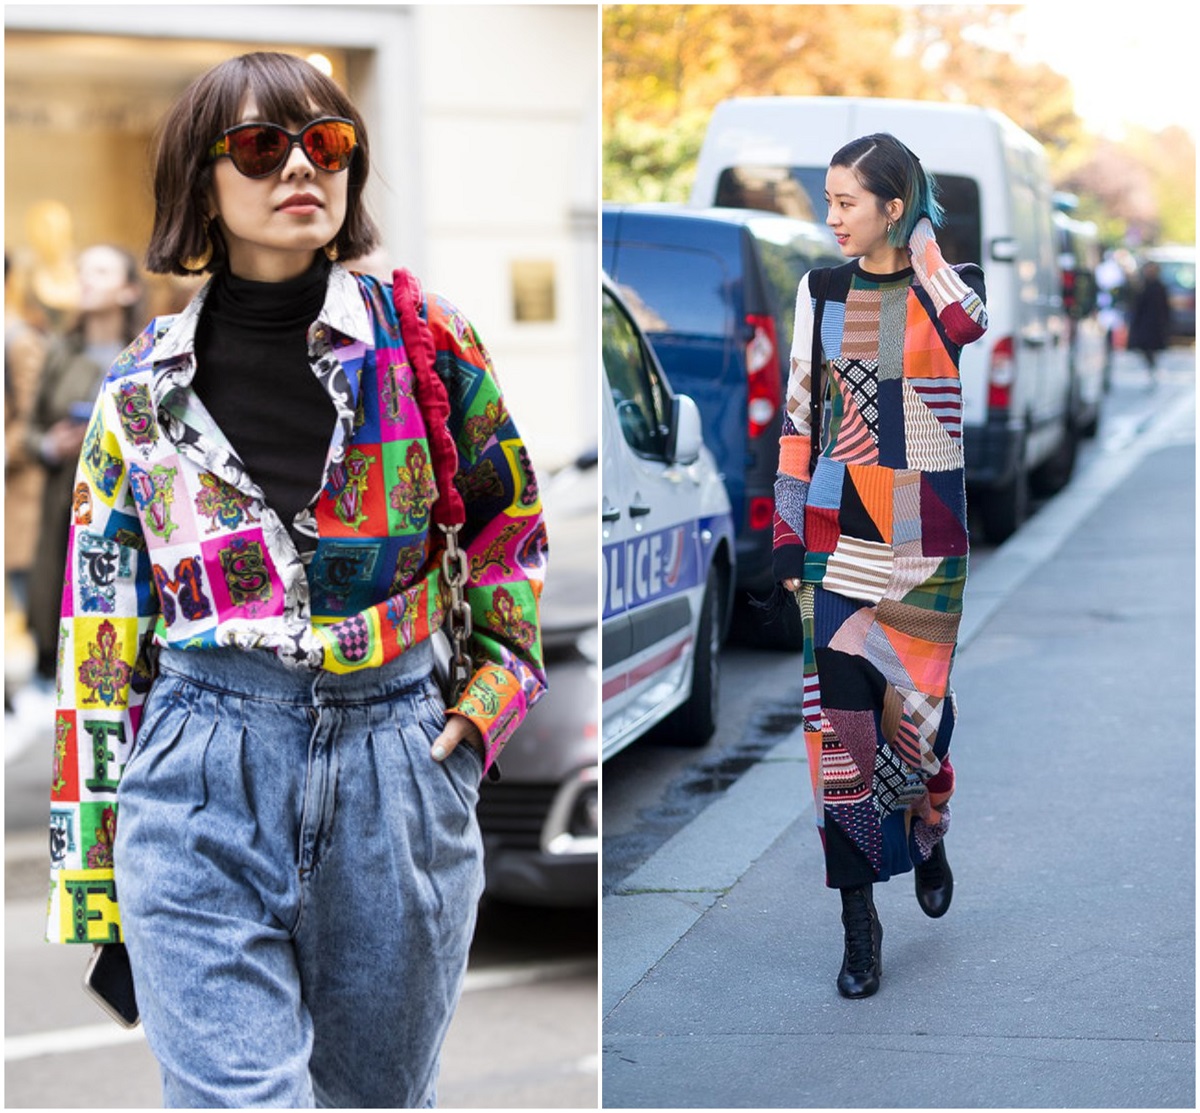 tissu patchwork street style femme veste couleurs vives